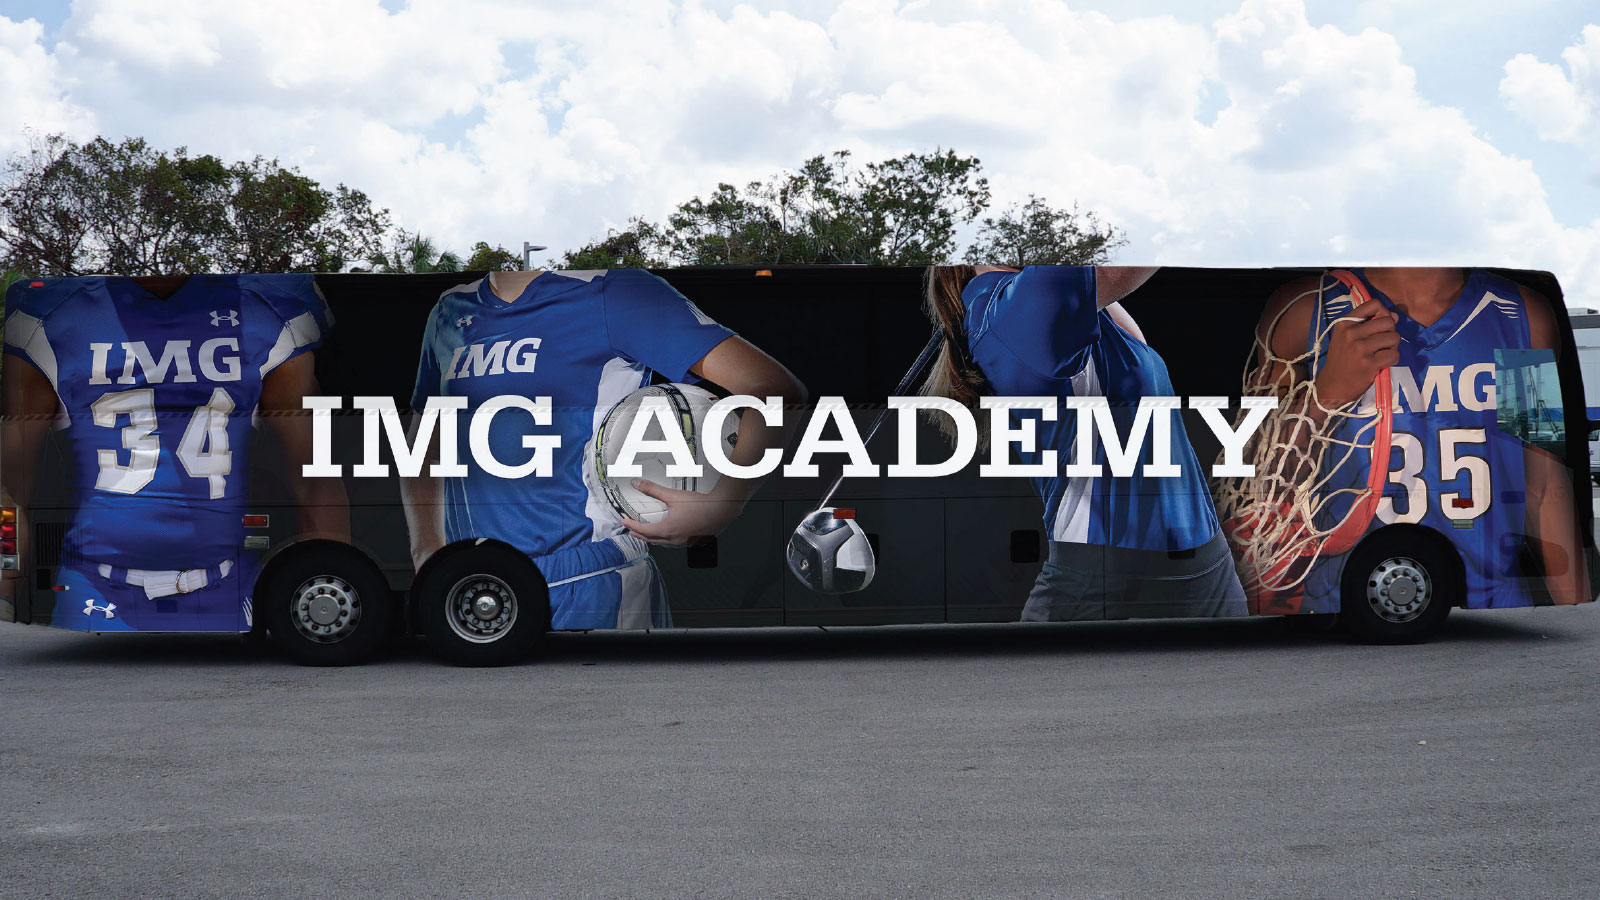 img academy bus